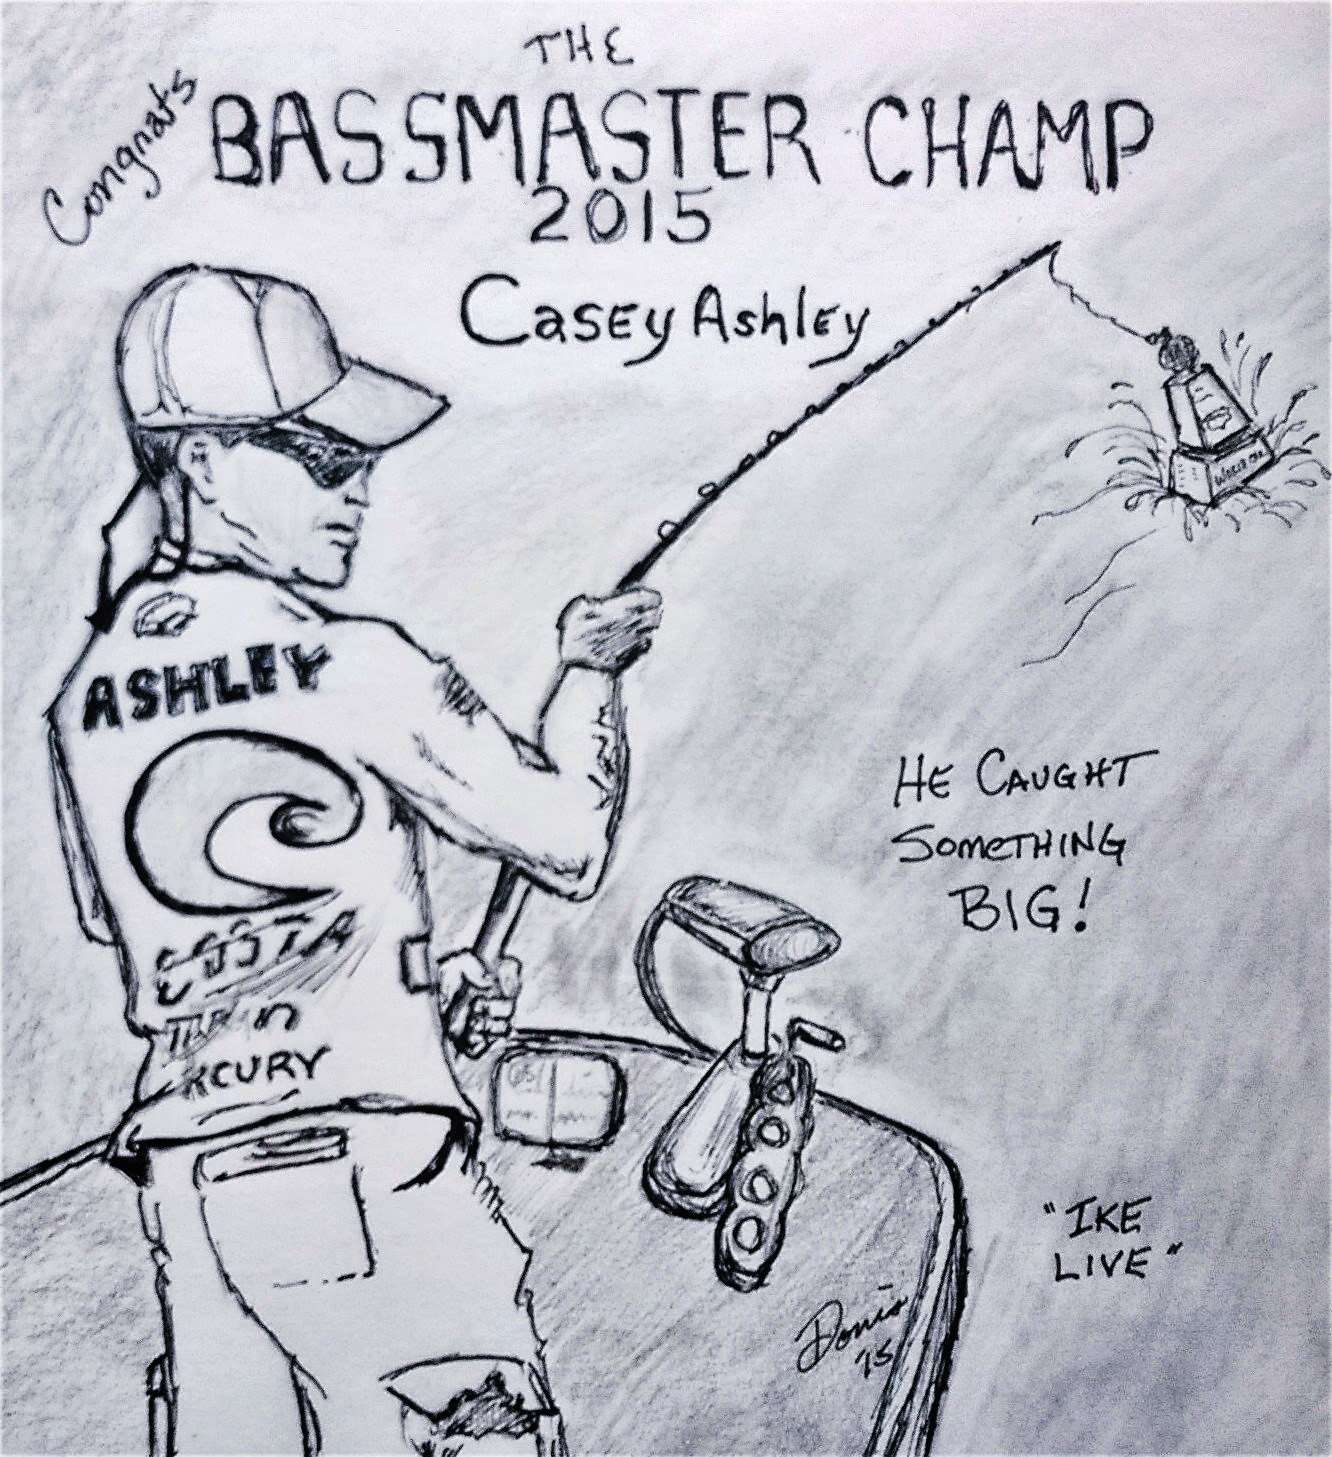 ... and champion Casey Ashley.